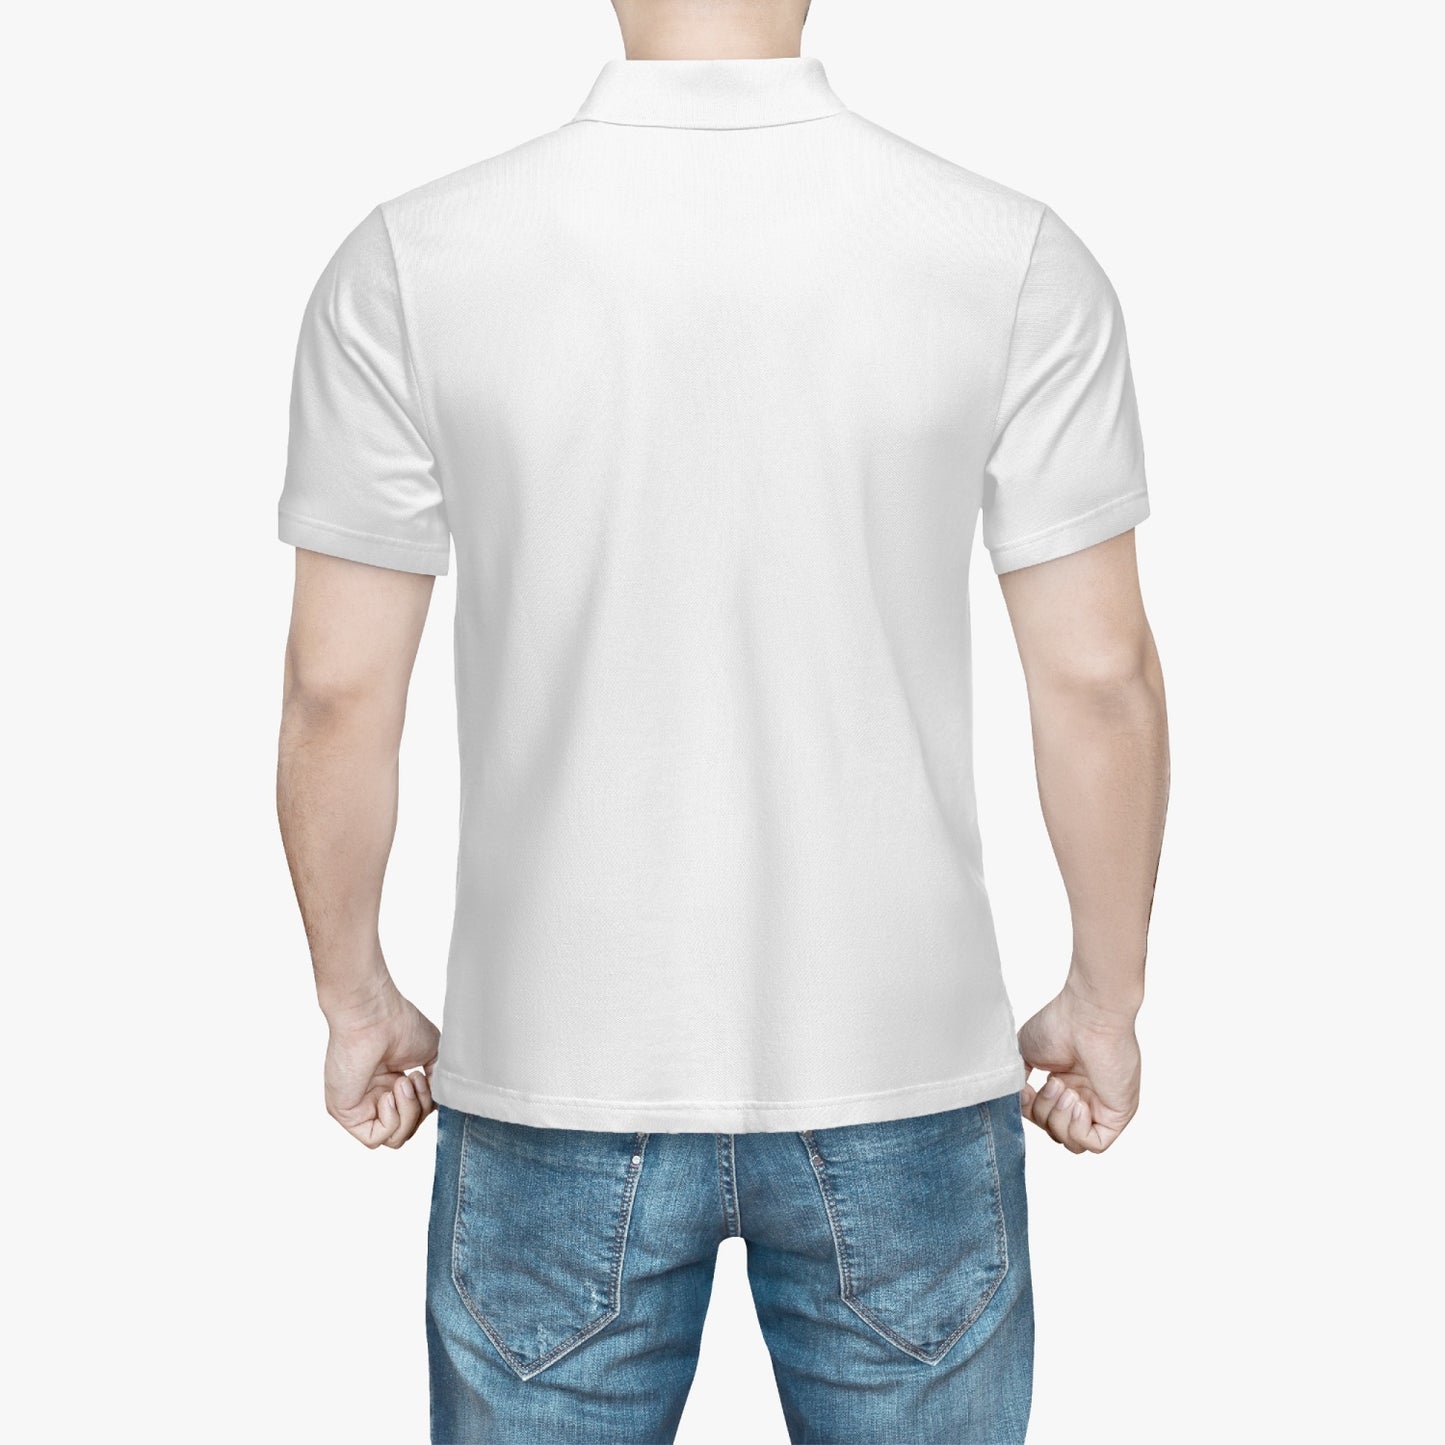 Polo Shirt ActSunX - White